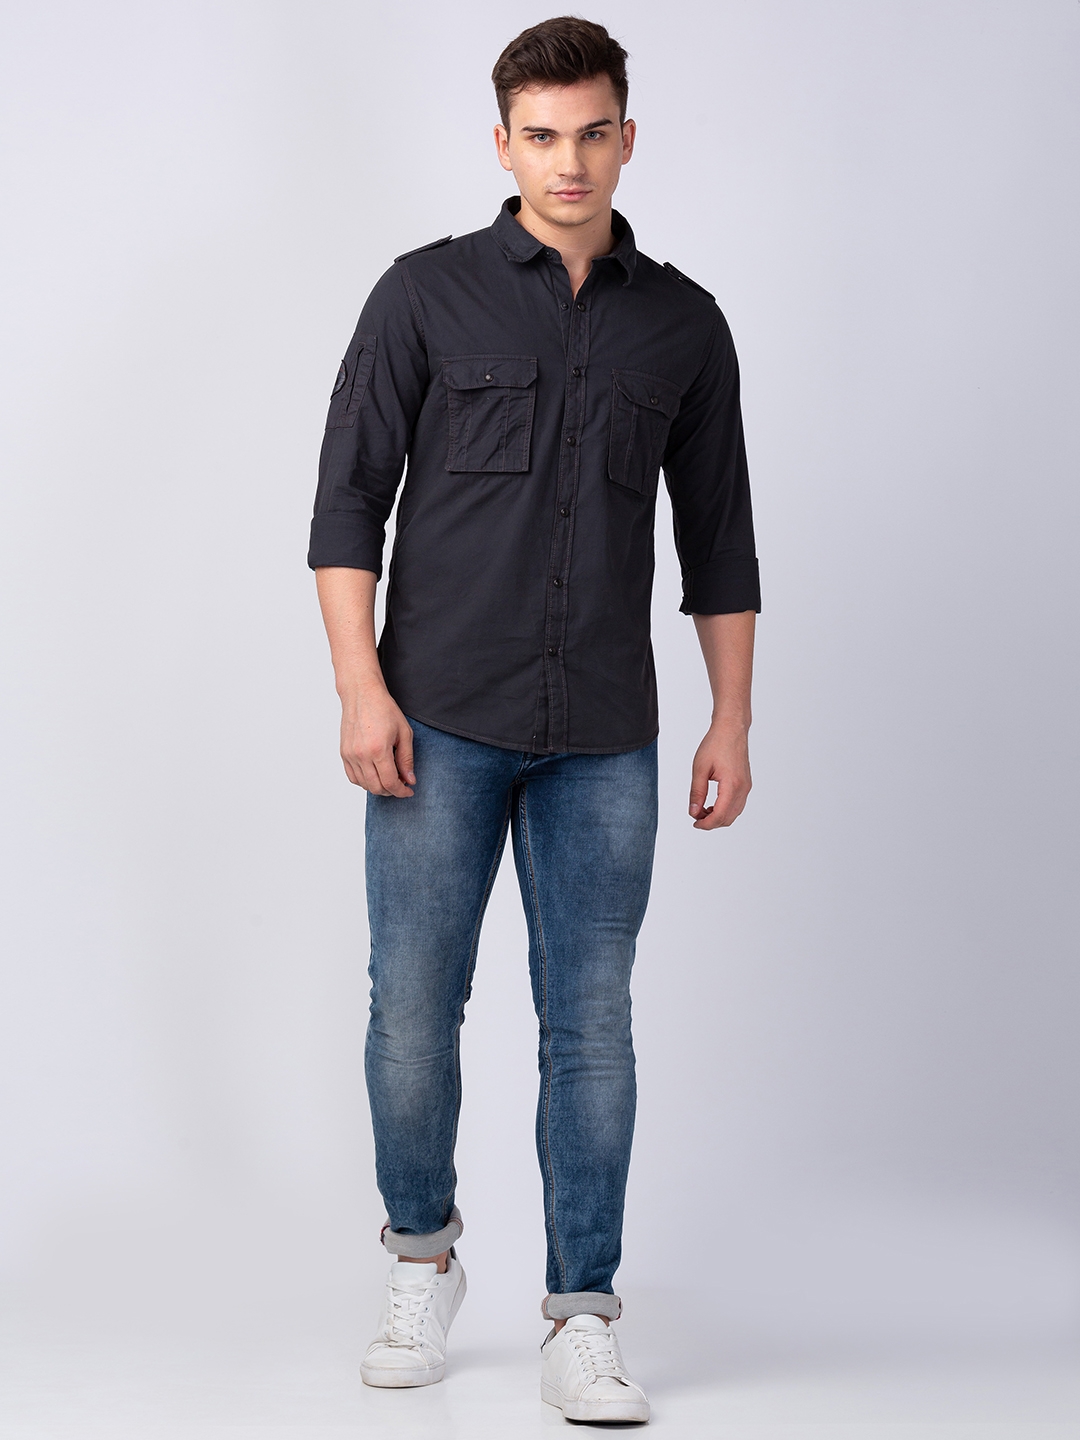 Spykar | Men's Grey Cotton Solid Casual Shirts 1